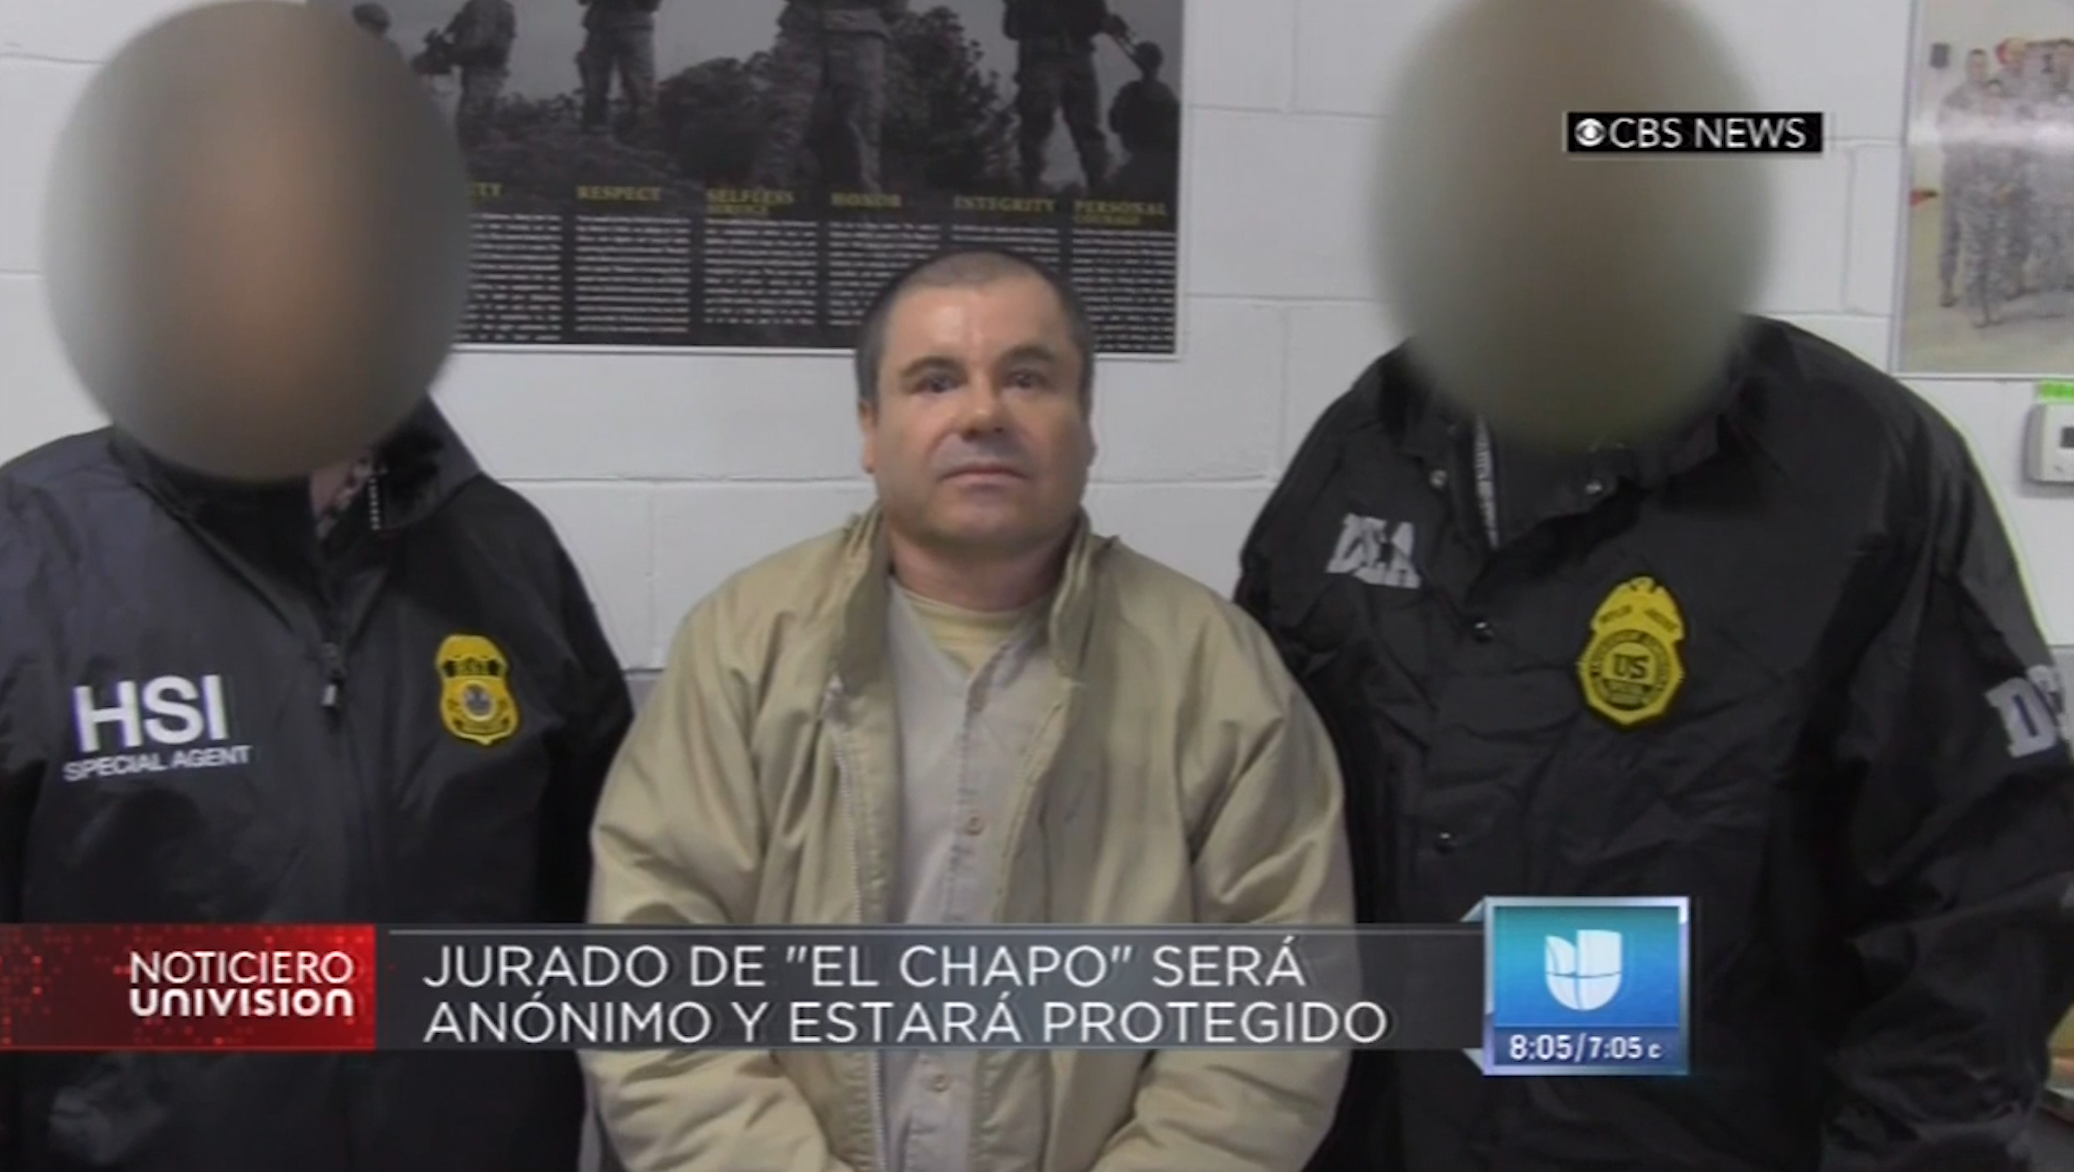 Jurado De “El Chapo Guzmán” Será Anónimo